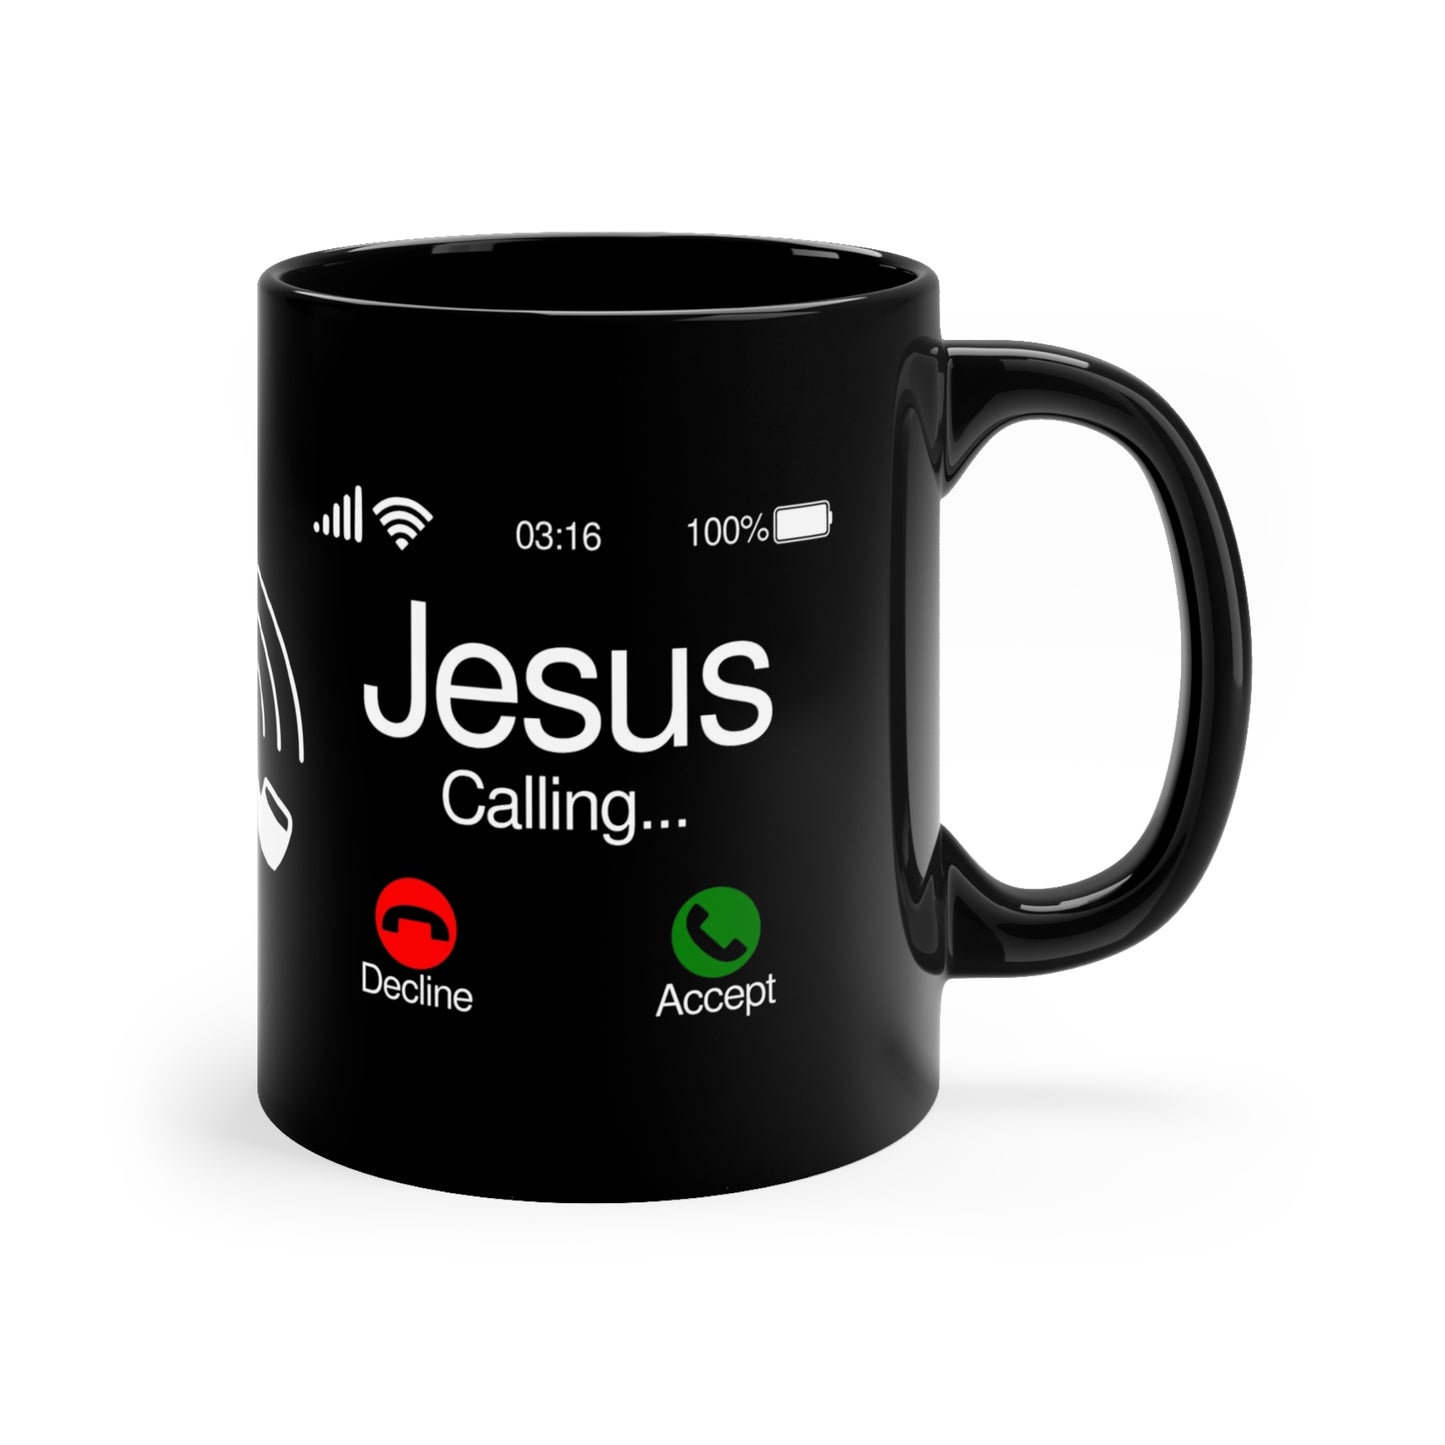 JESUS CALLING Mug - MUGSCITY - Free Shipping